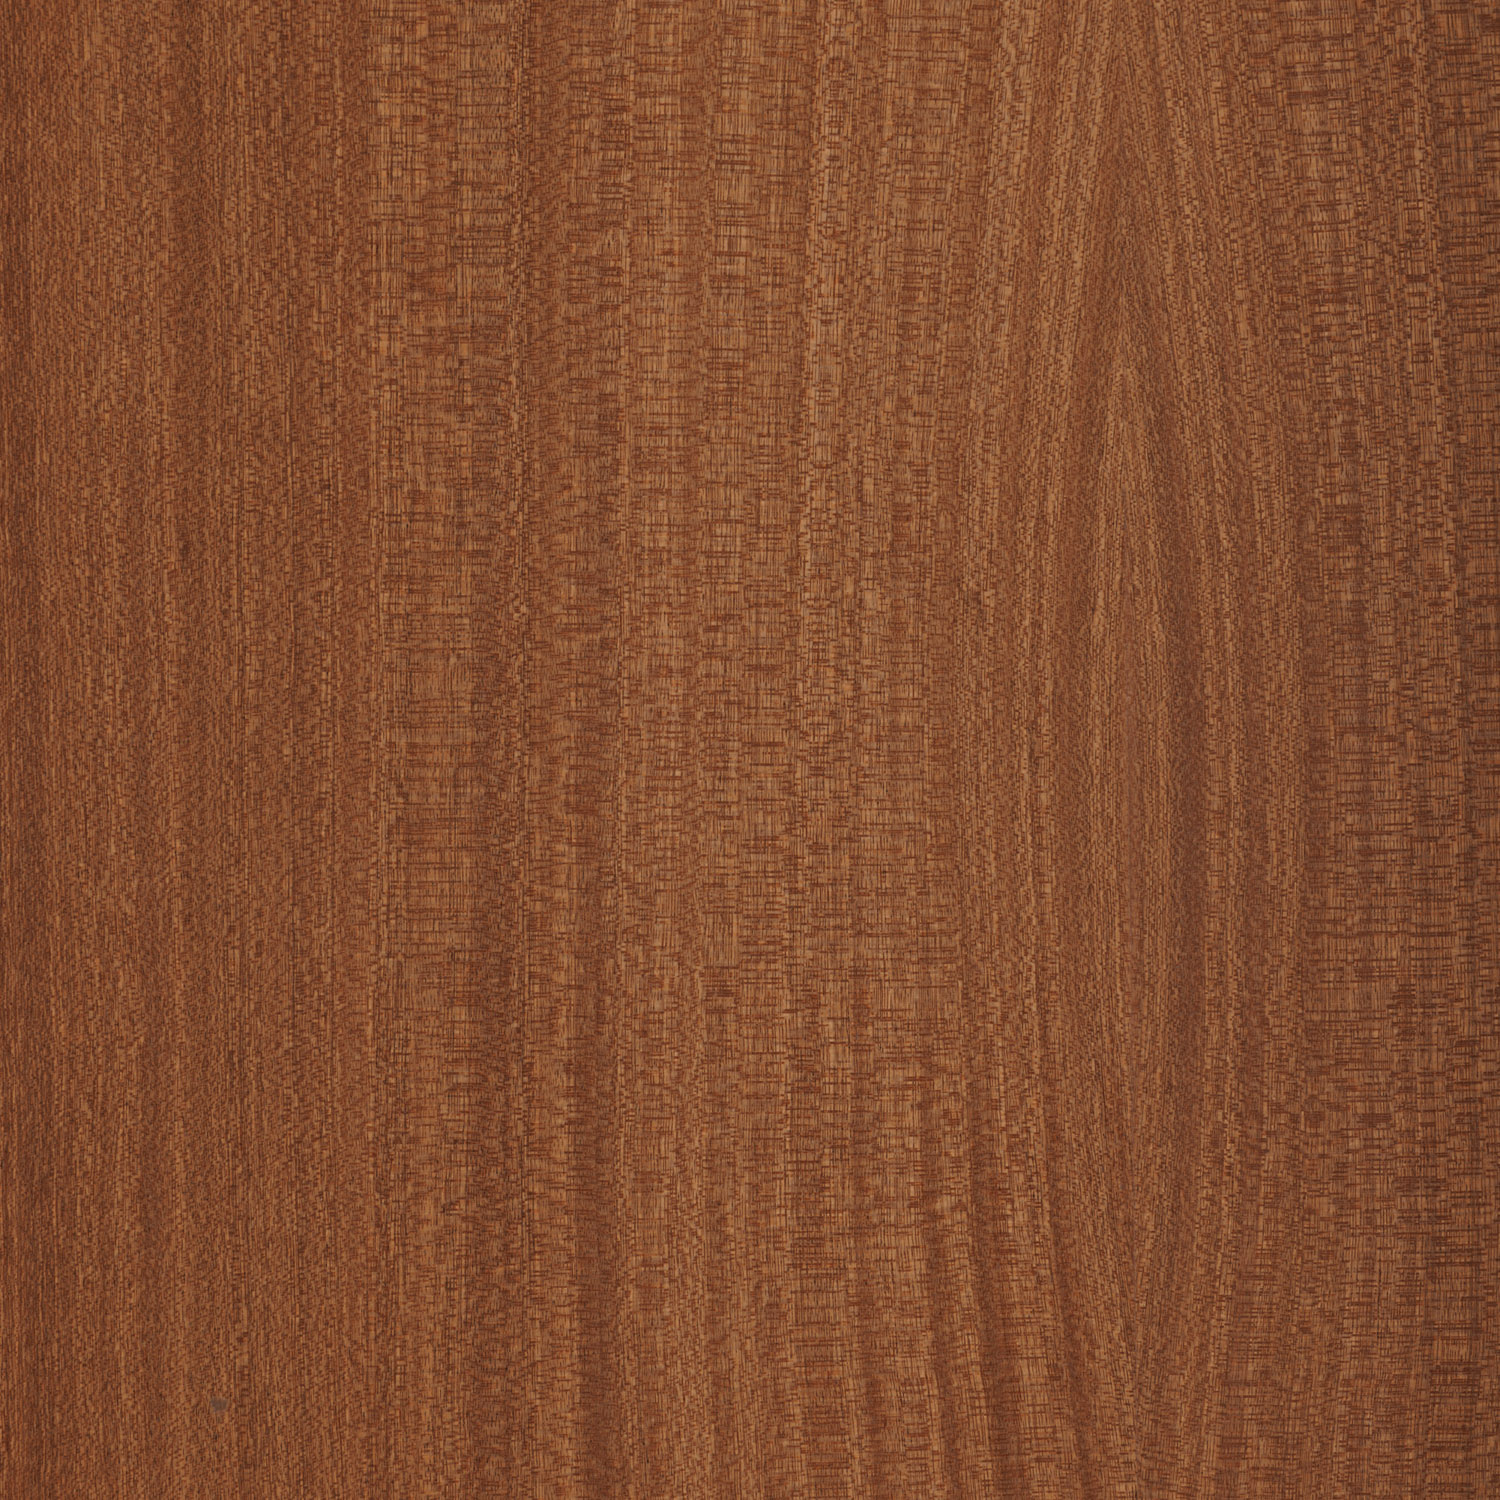 teak natural wood veneer panel